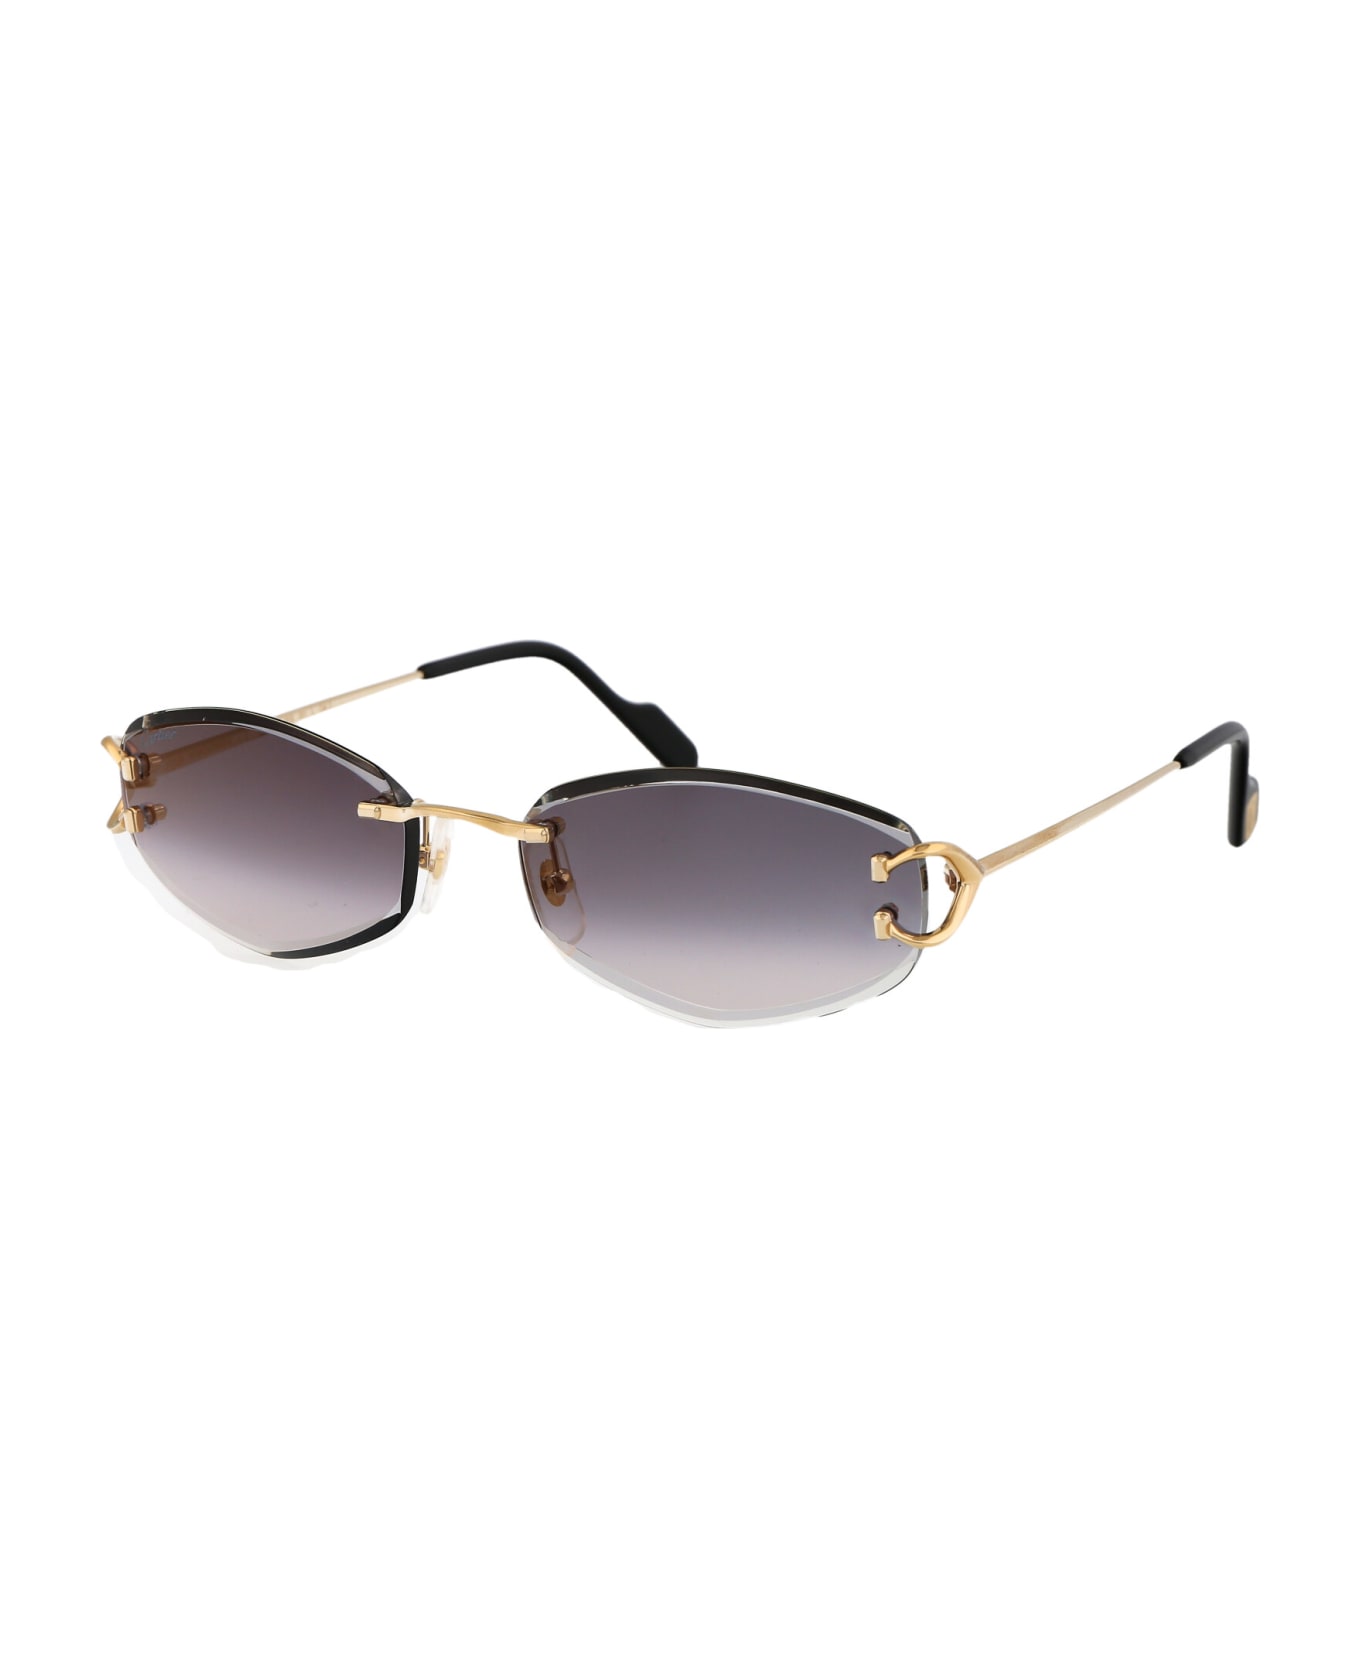 Cartier Eyewear Ct0467s Sunglasses - 001 GOLD GOLD GREY サングラス